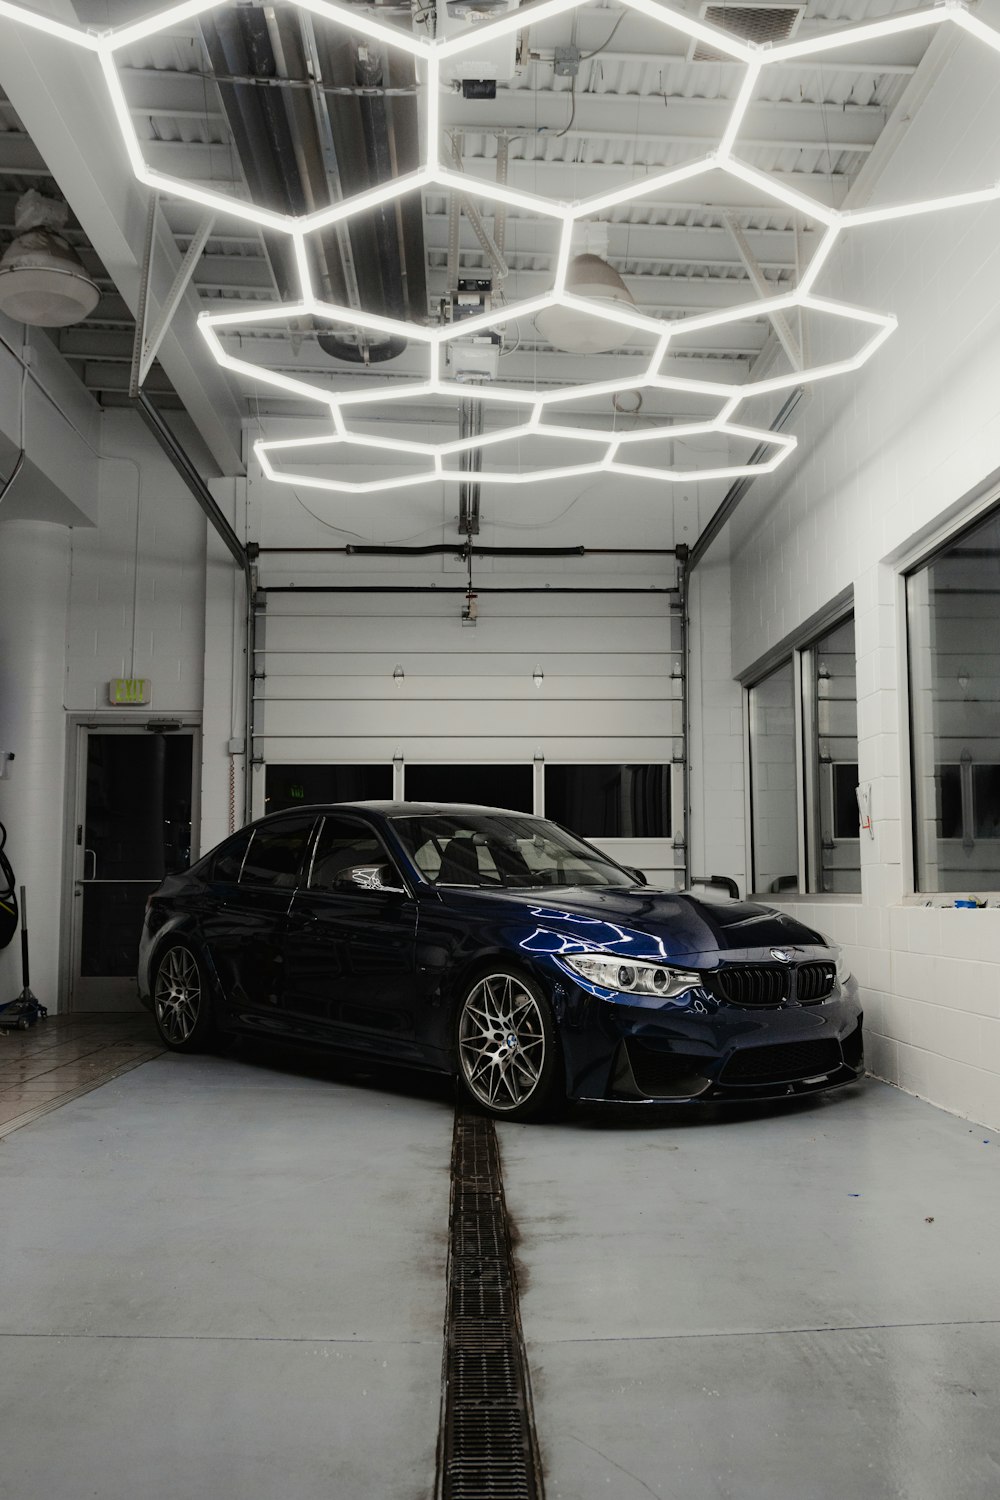 a black car parked in a garage under a light fixture